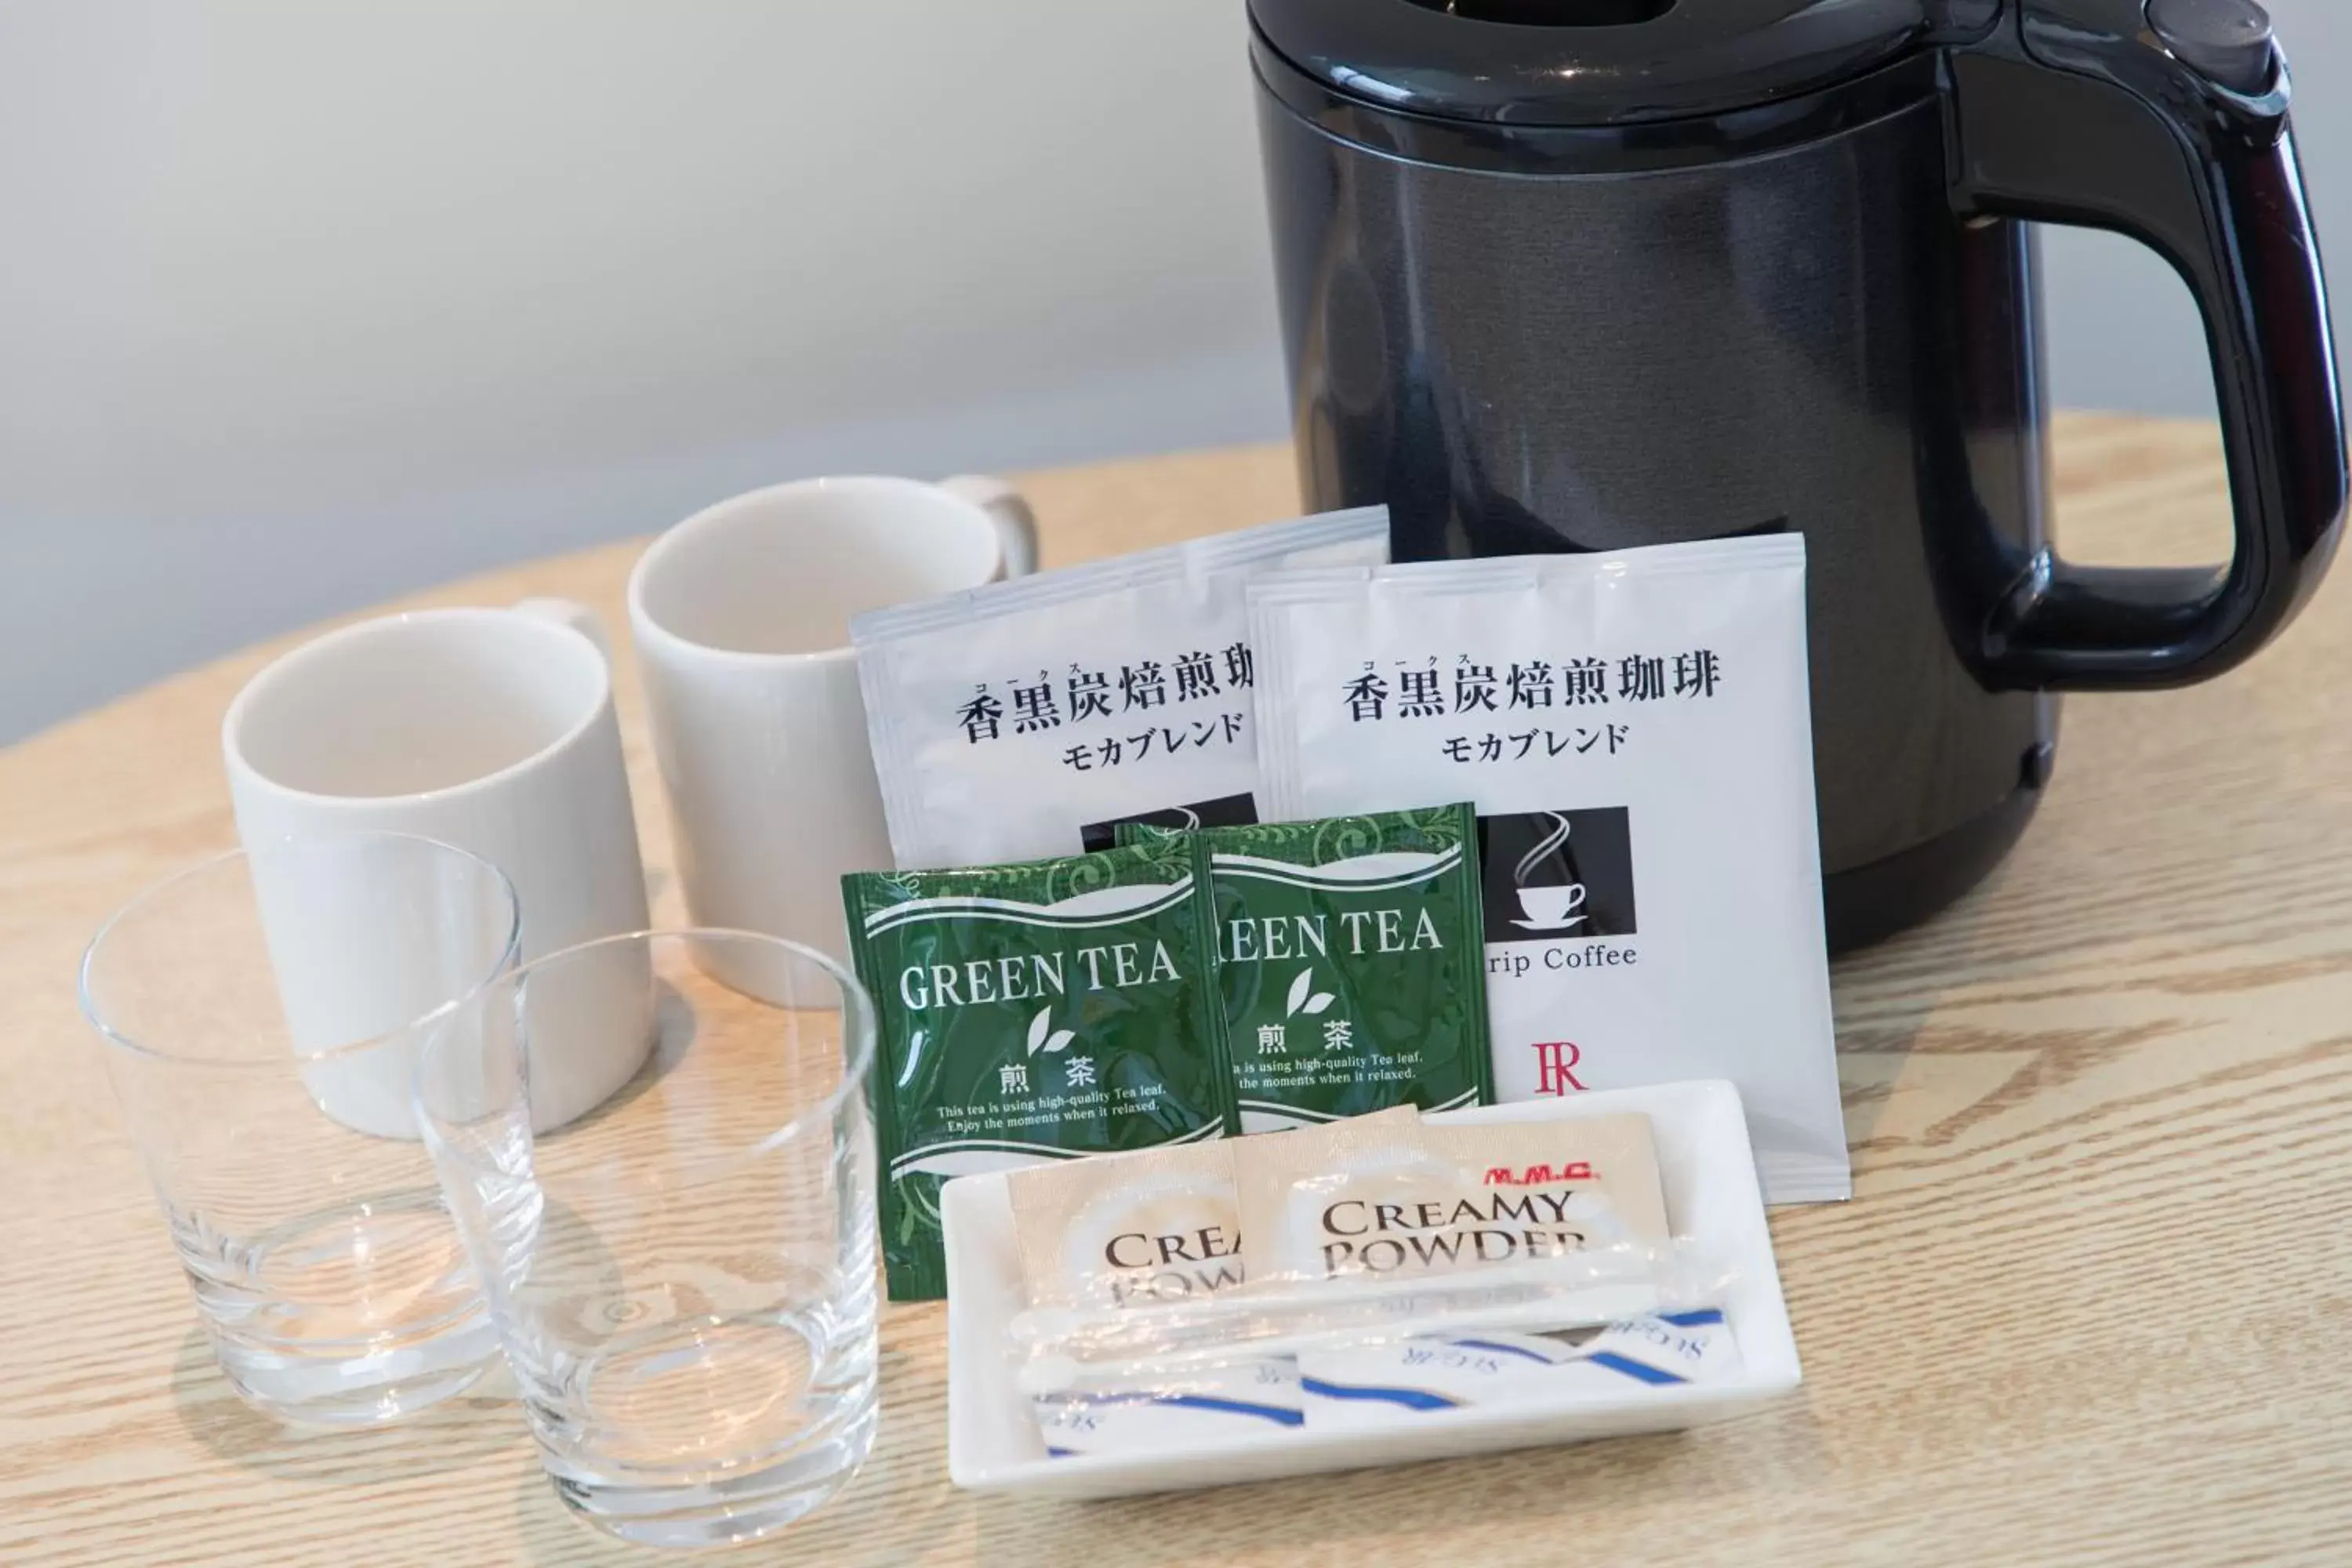 Coffee/tea facilities in JR Kyushu Hotel Blossom Shinjuku